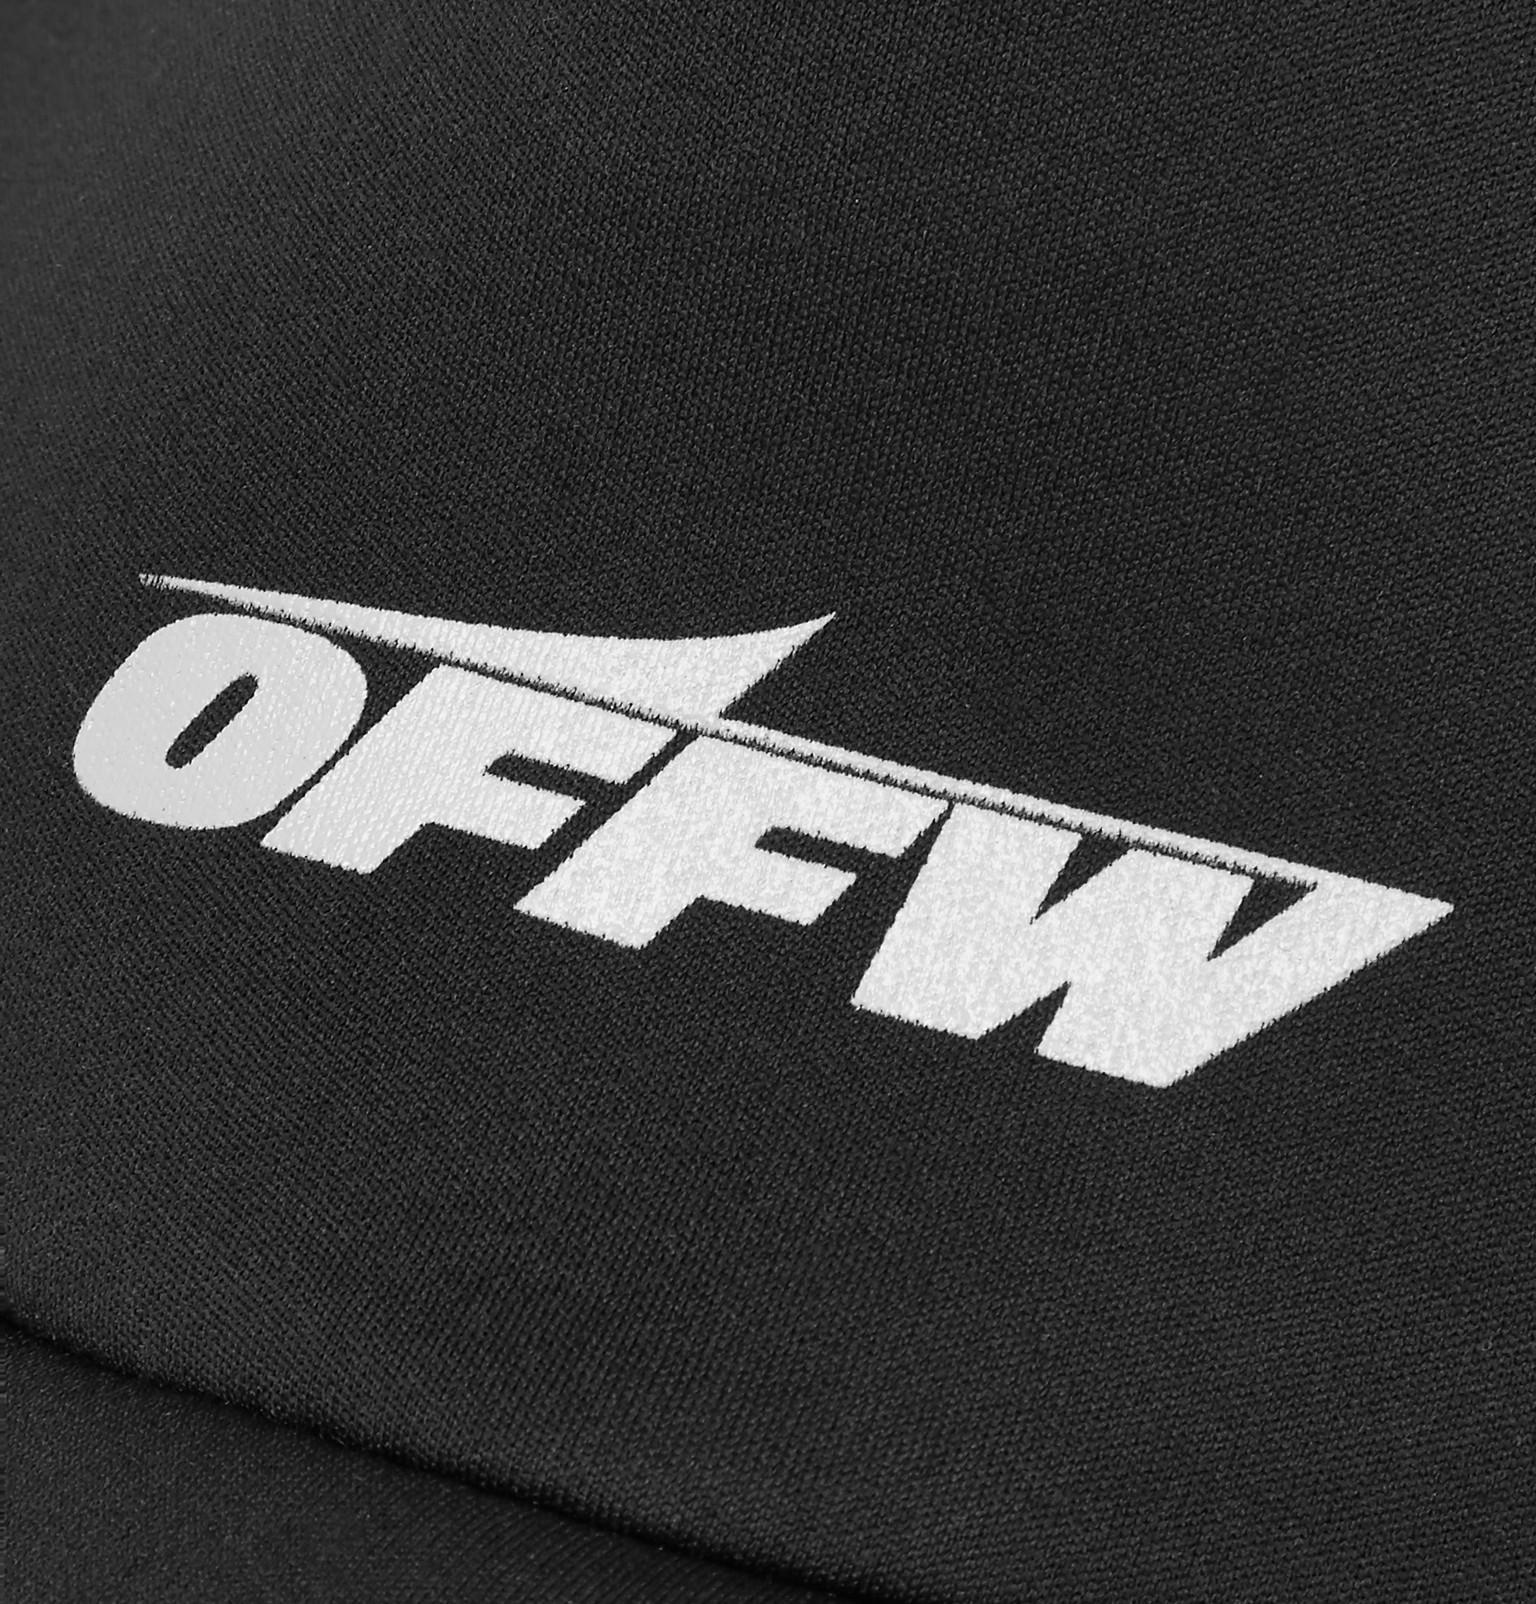 Off White Black Logo - LogoDix